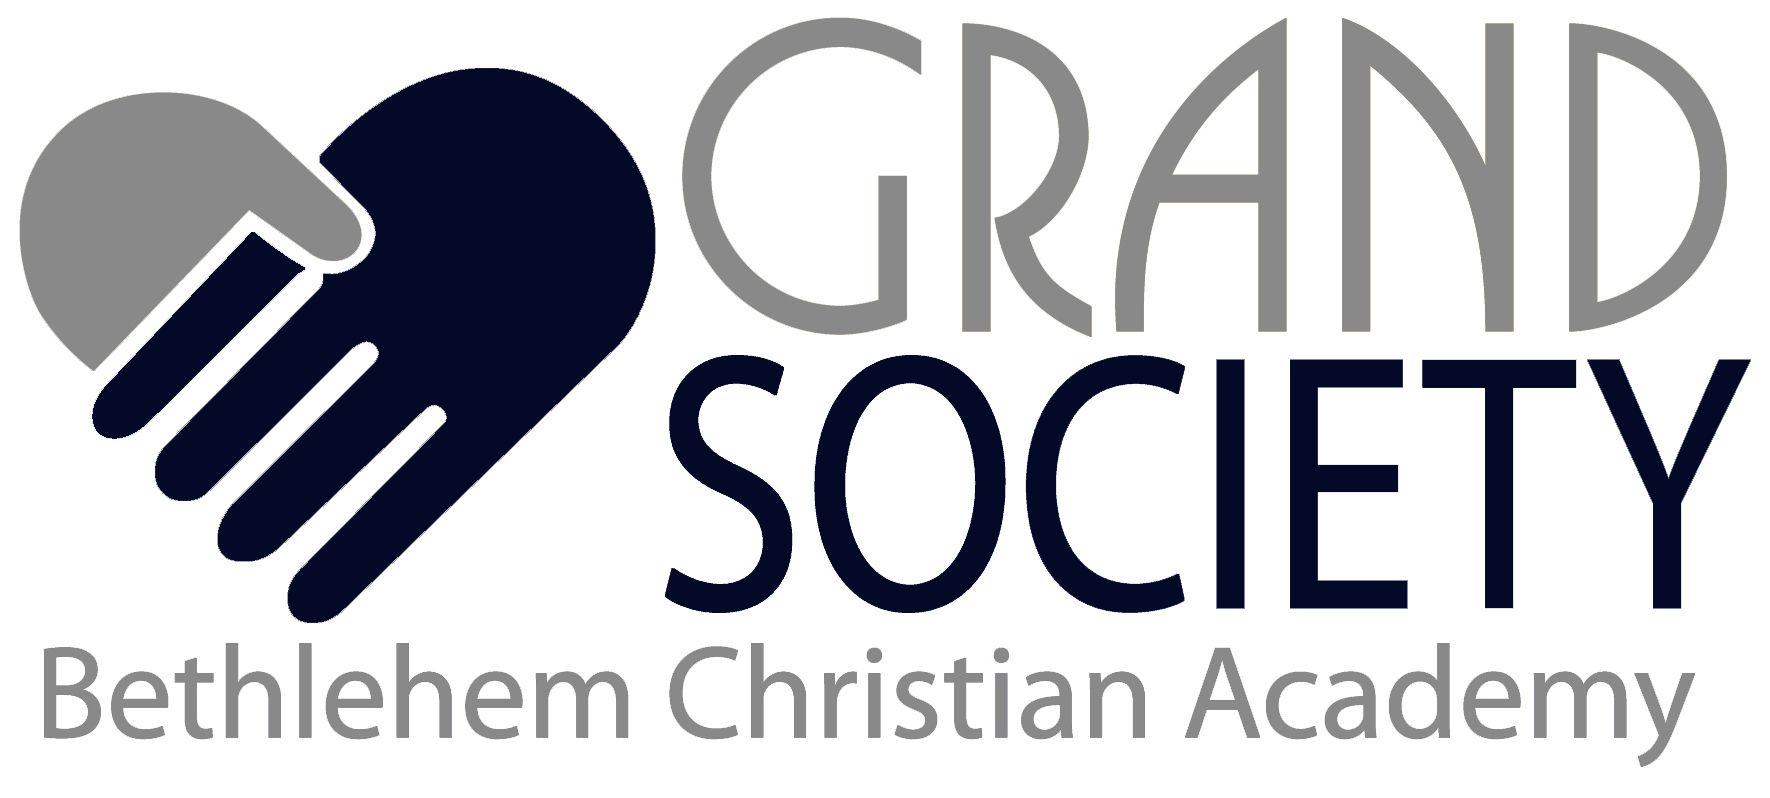 Bethlehem Christian Academy Logo - BCA Grand Society - Bethlehem Christian Academy